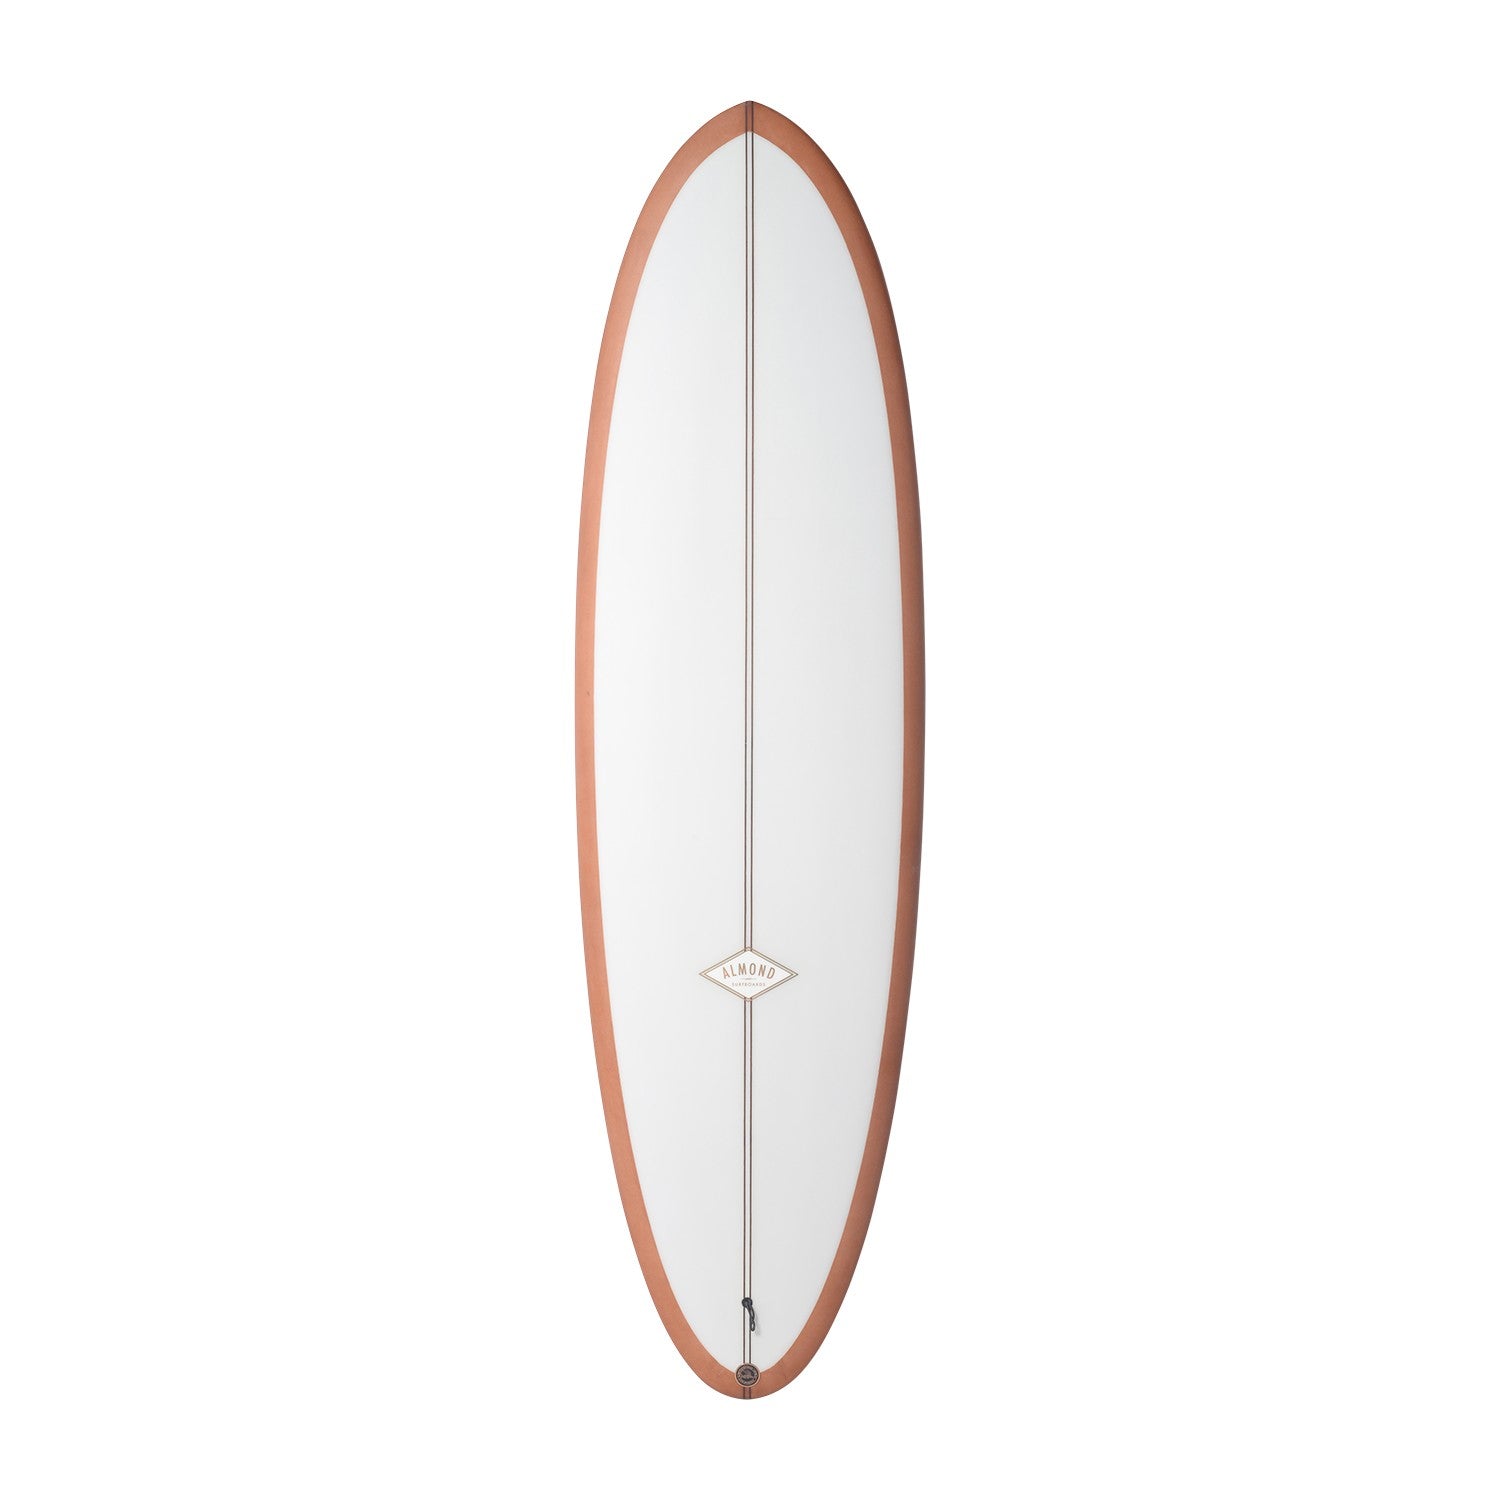 Tablas de surf ALMOND - Pleasant Pheasant 6'6 (PU) - Transparente / Bronceado